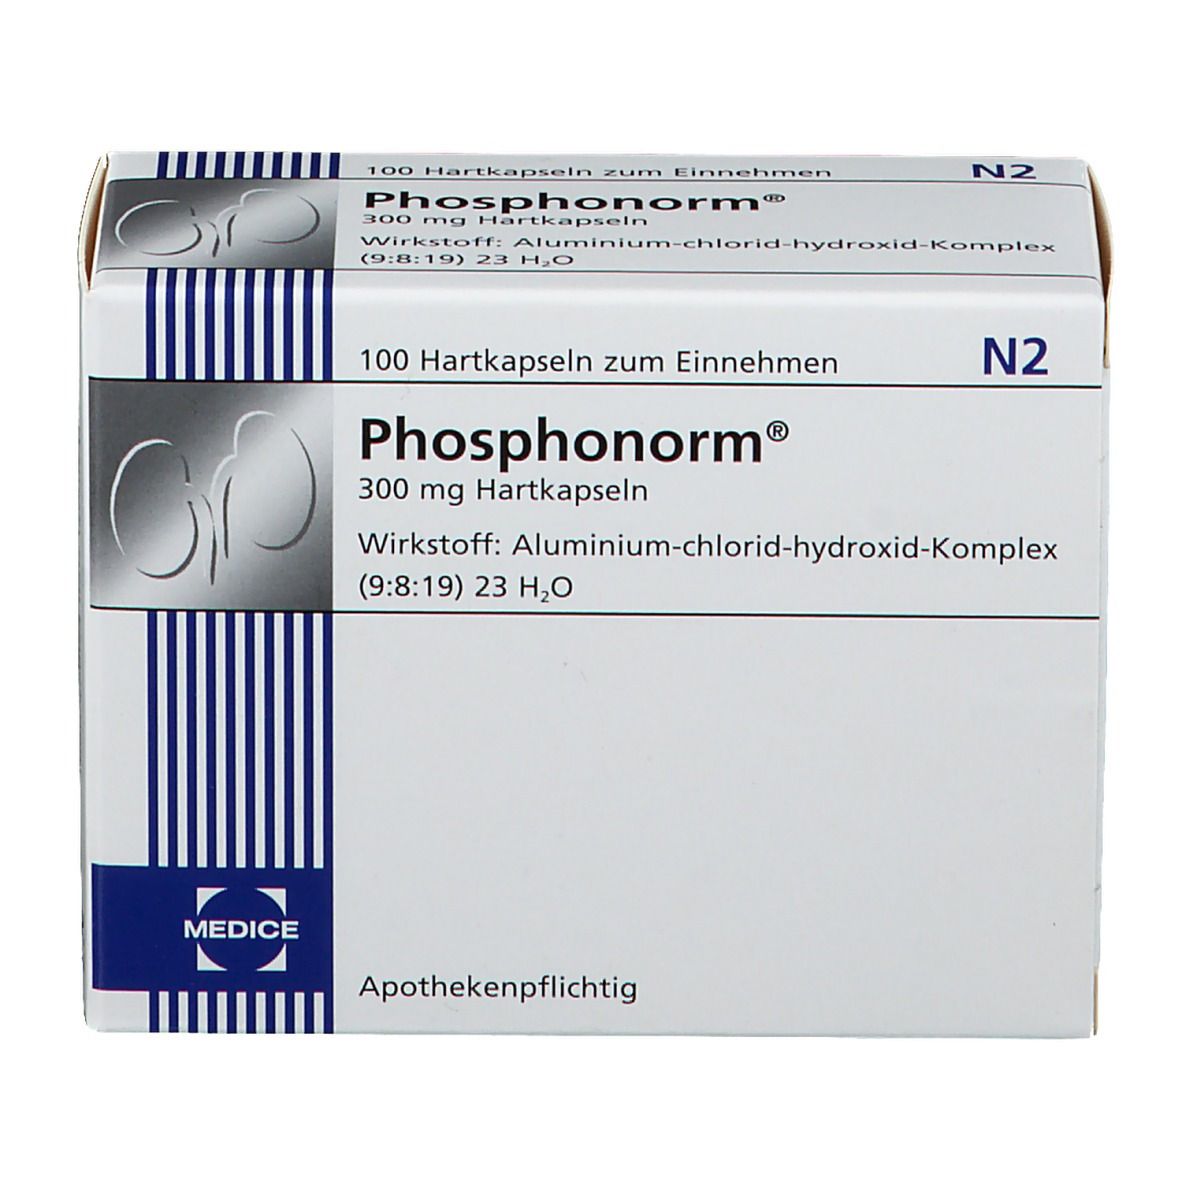 Phosphonorm® 300 mg